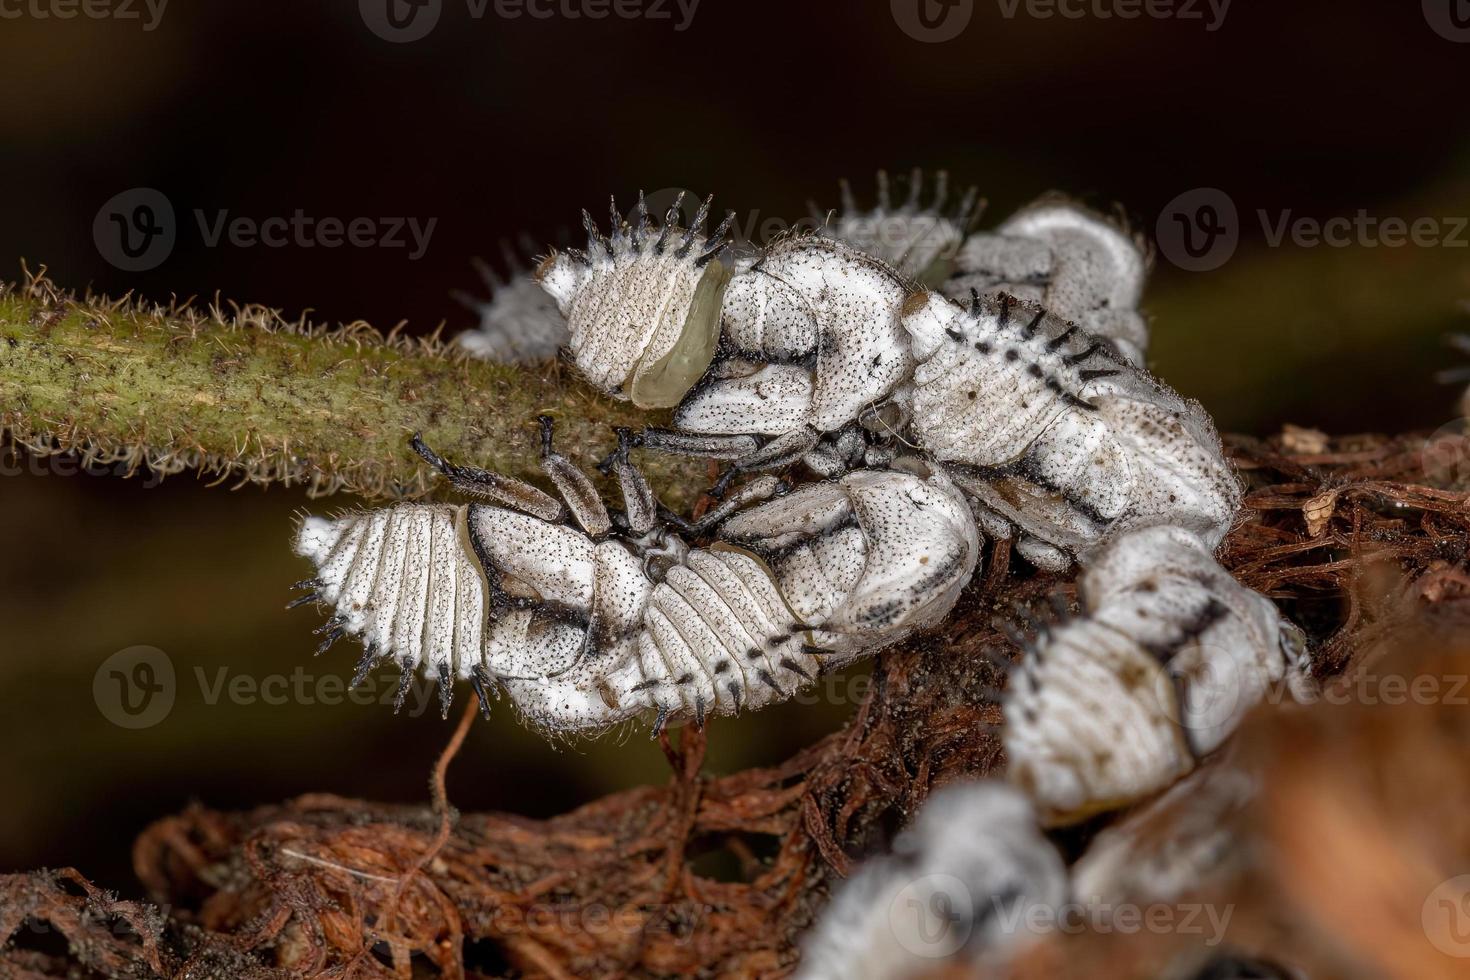 nymphes typiques des cicadelles des arbres photo